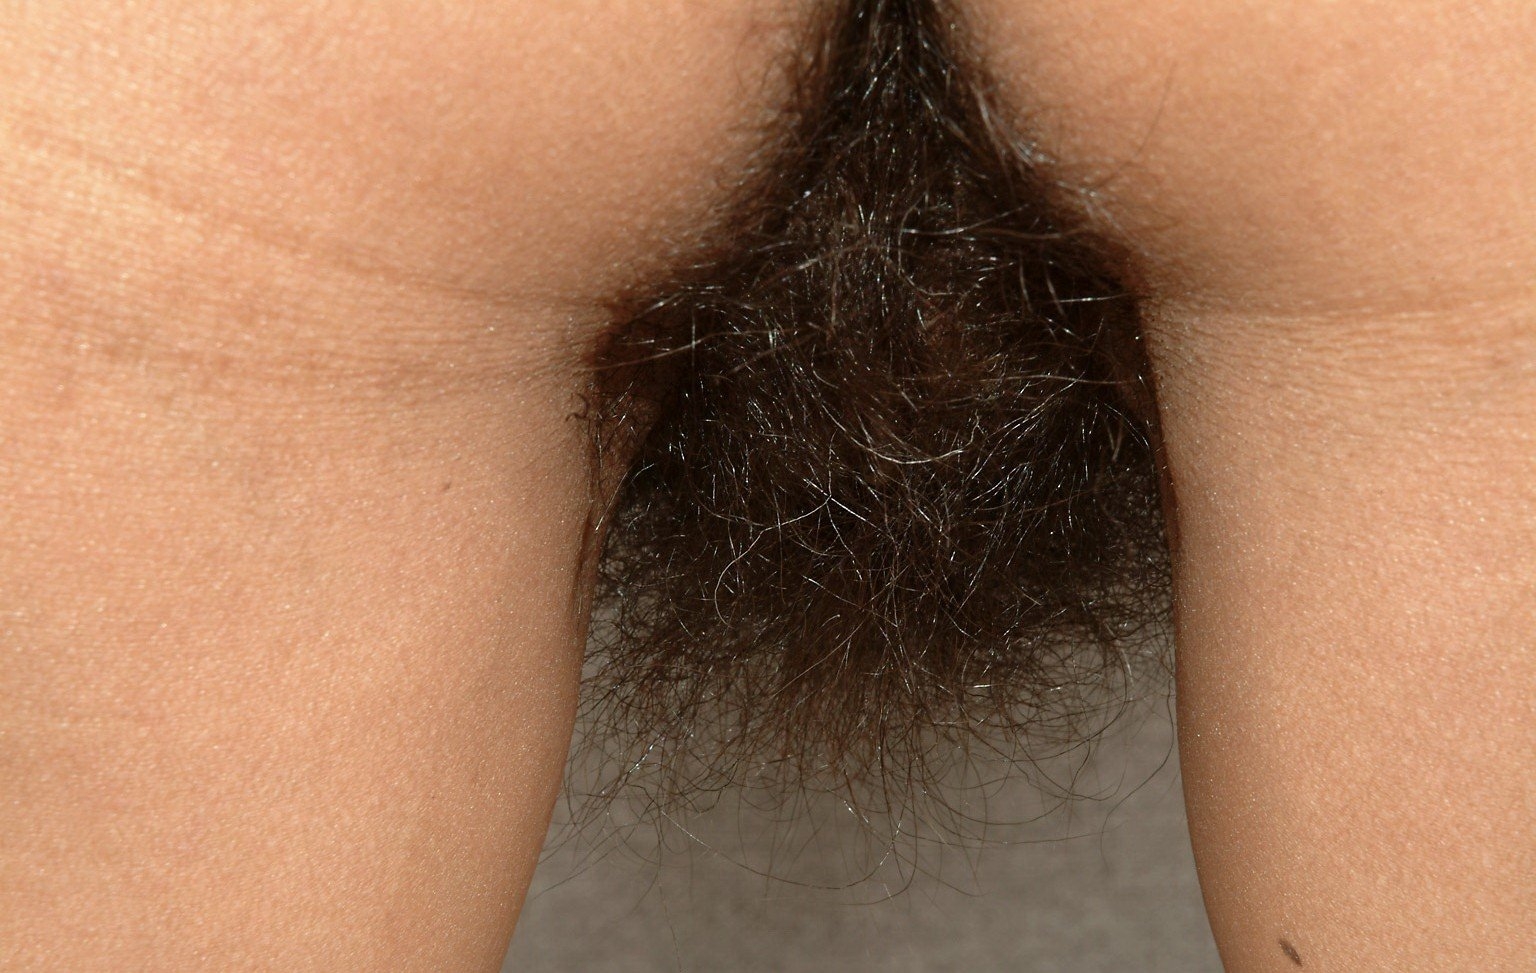 Long hairy vulva